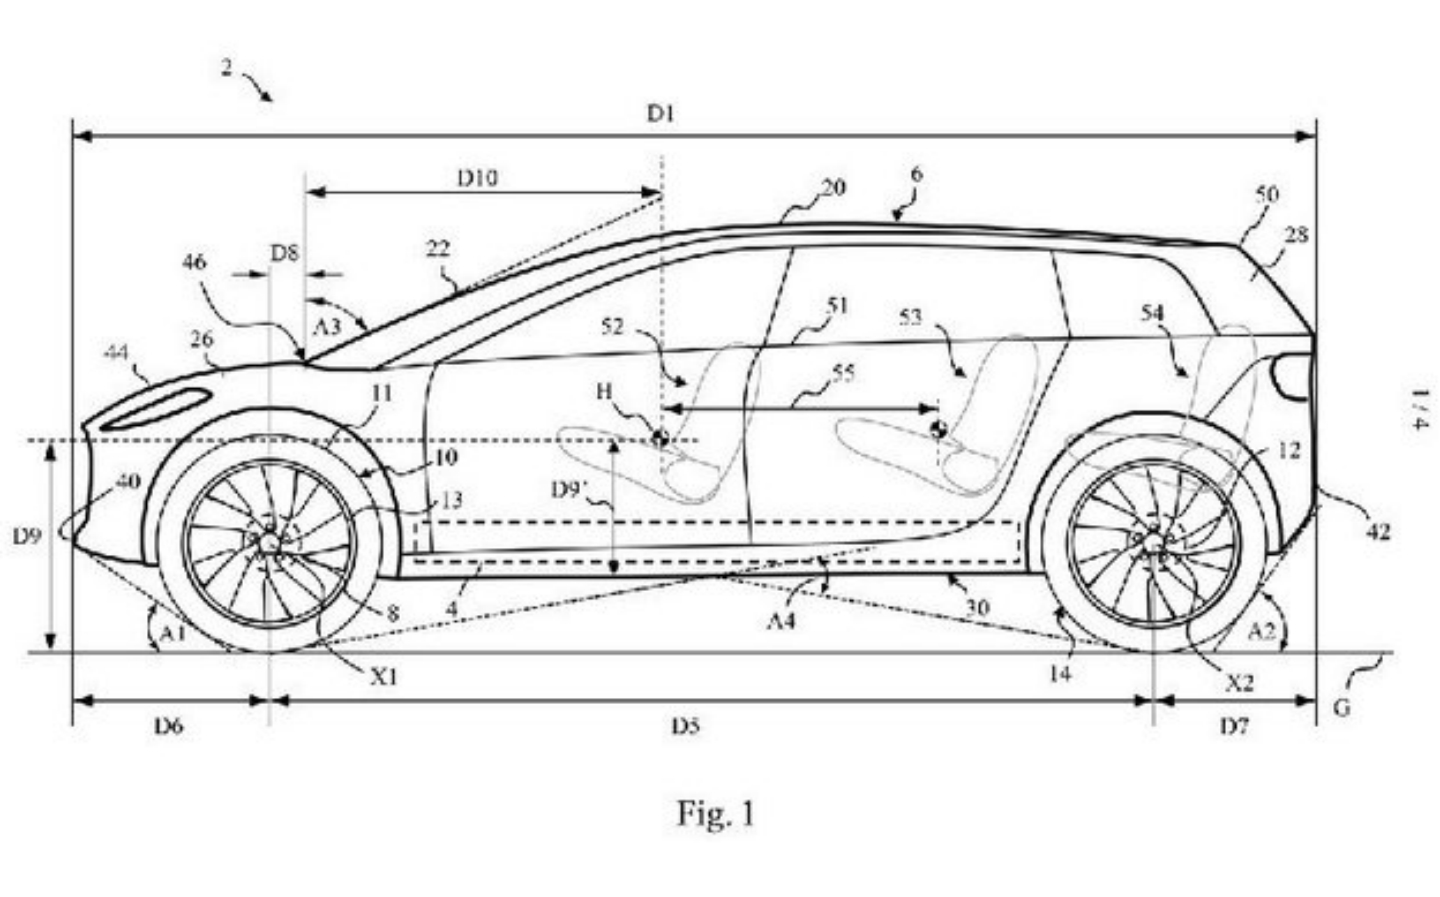 Dyson electric car patent image